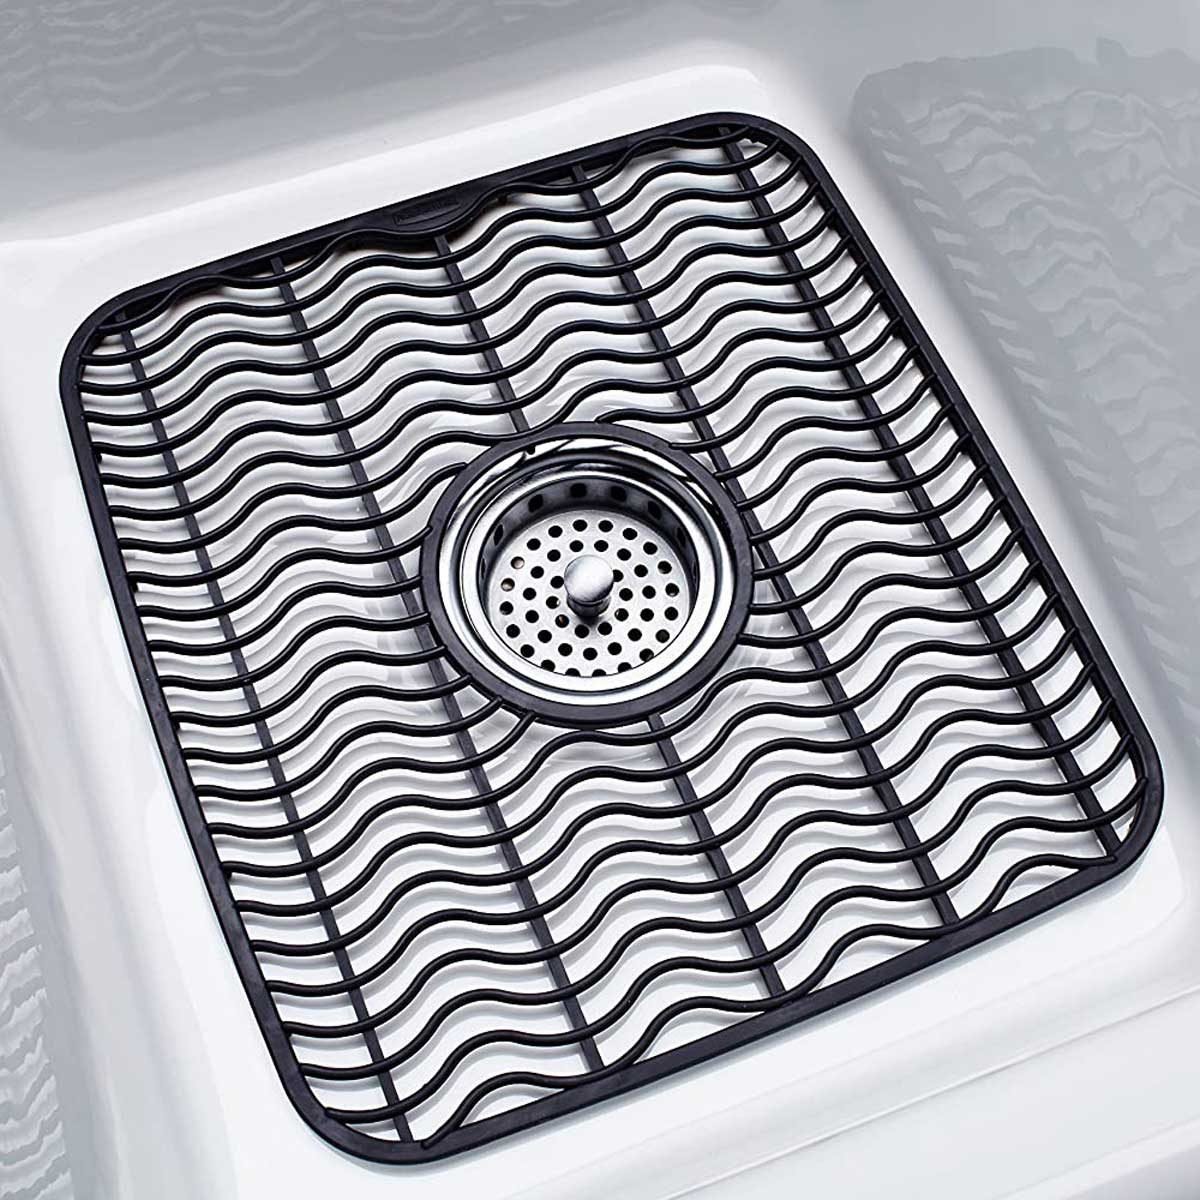 3 PCS Silicone Sink Protector Kitchen Sink Mats Rear Drain Non-Slip Kitchen  S